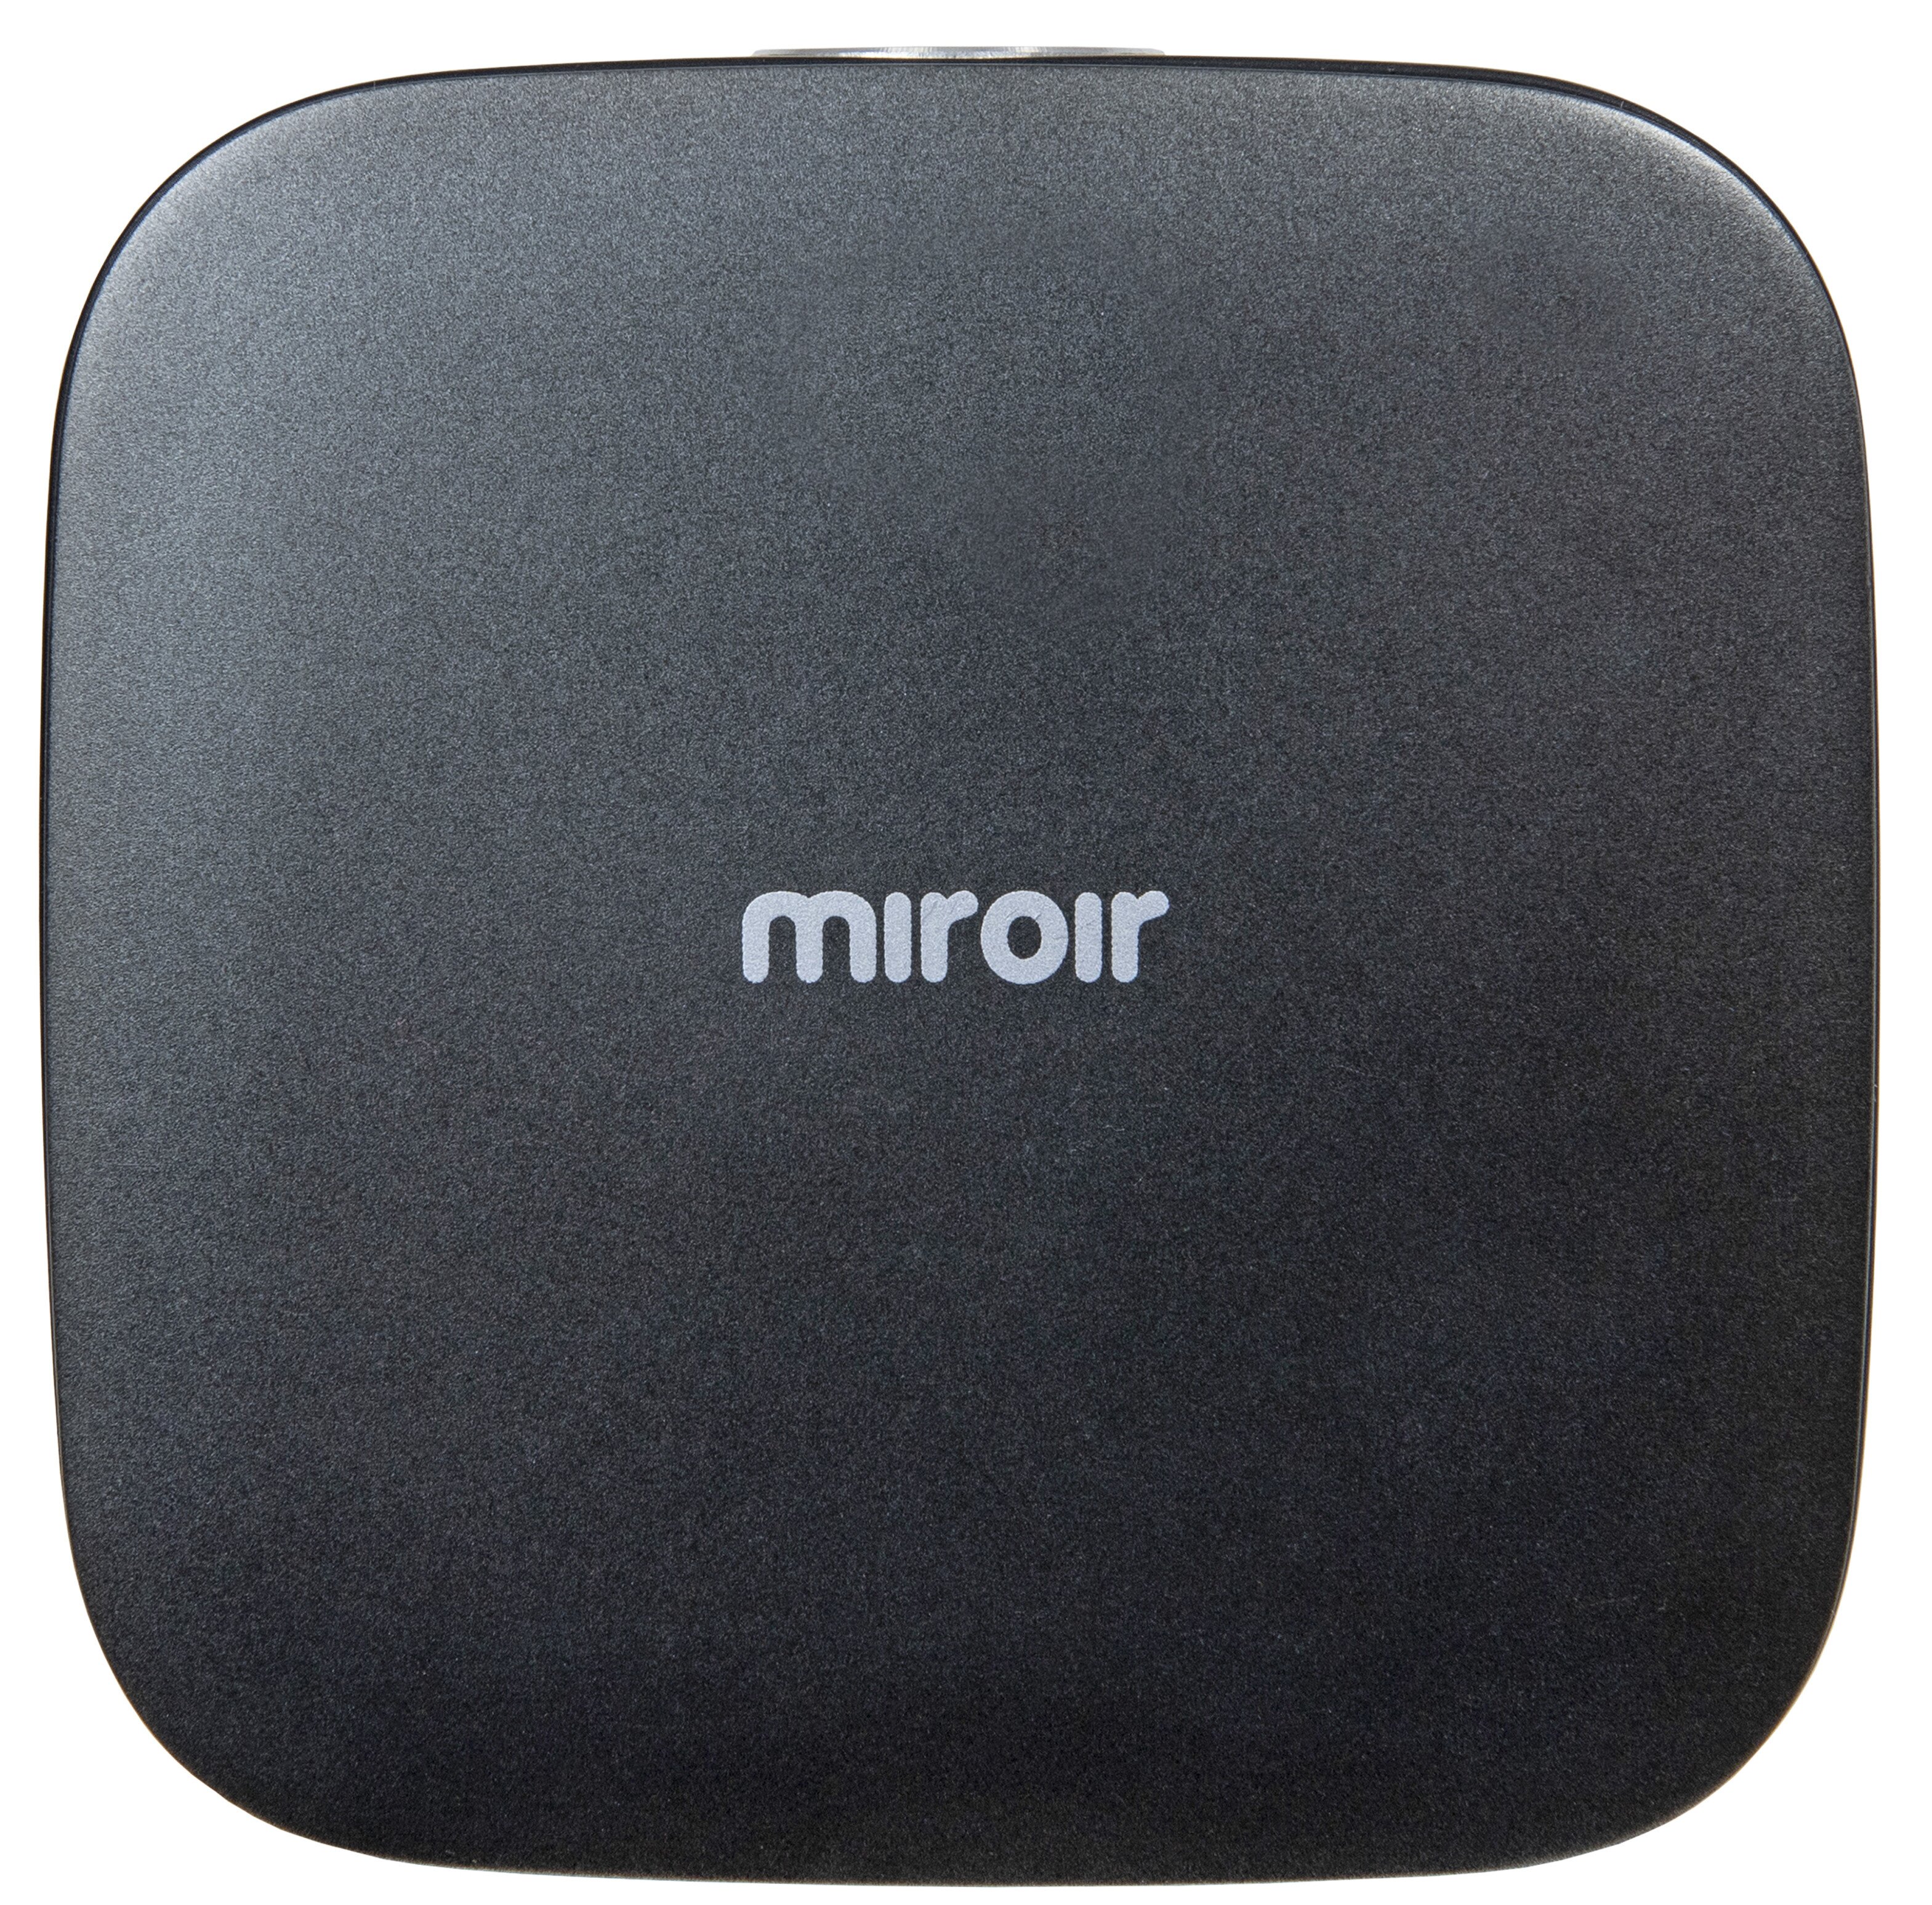 miroir micro projector app